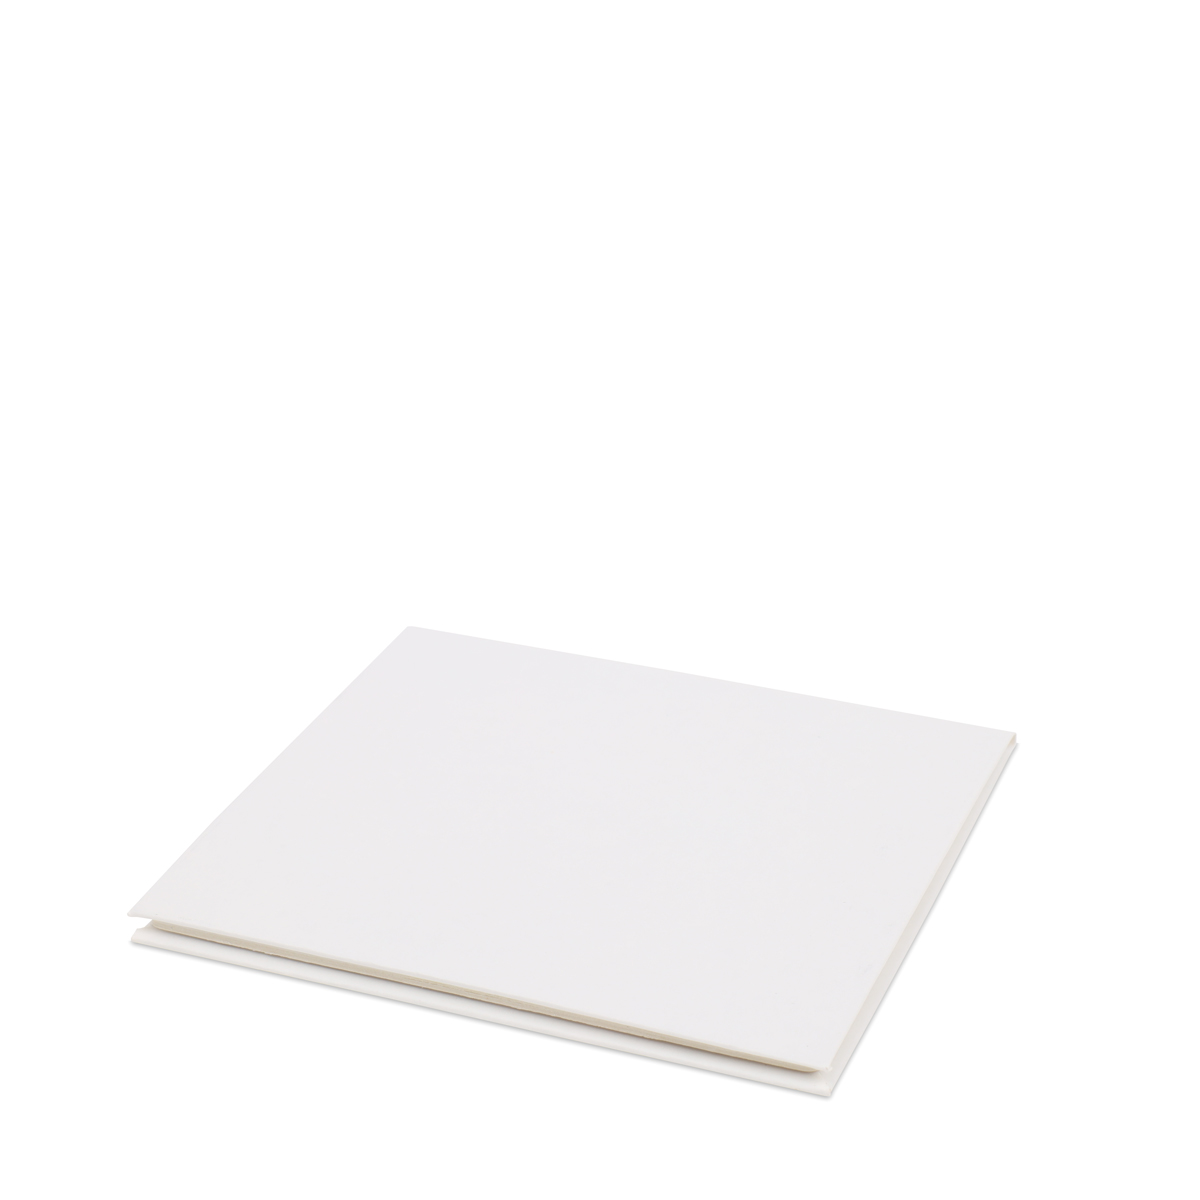 Gift card folders - Kraft